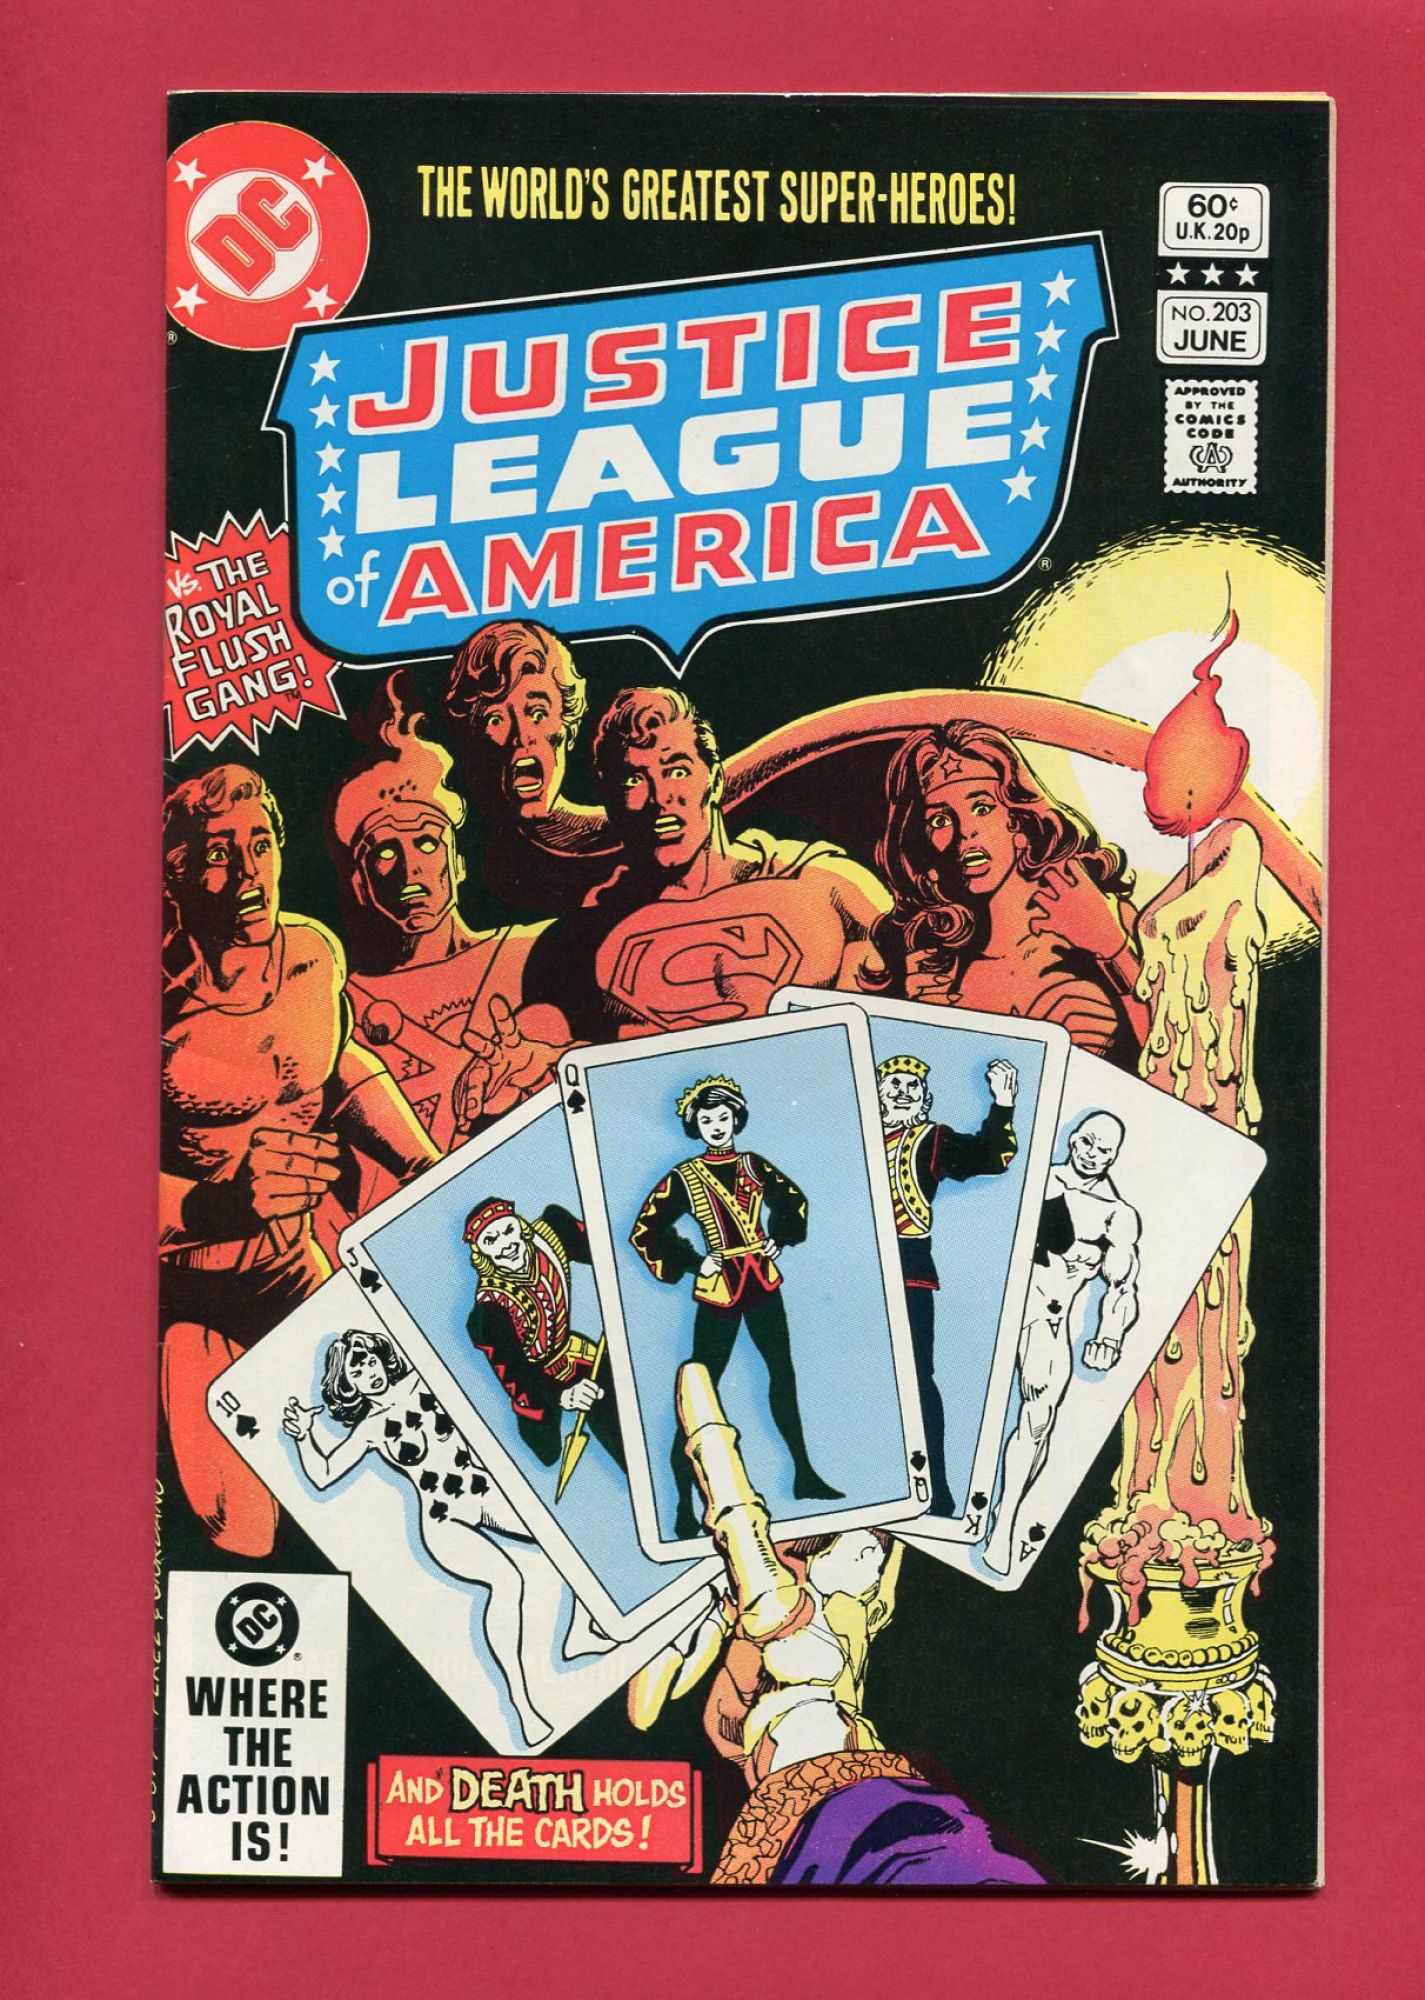 Justice League of America (Volume 1 1960) #203, Jun 1982, 9.0 VF/NM